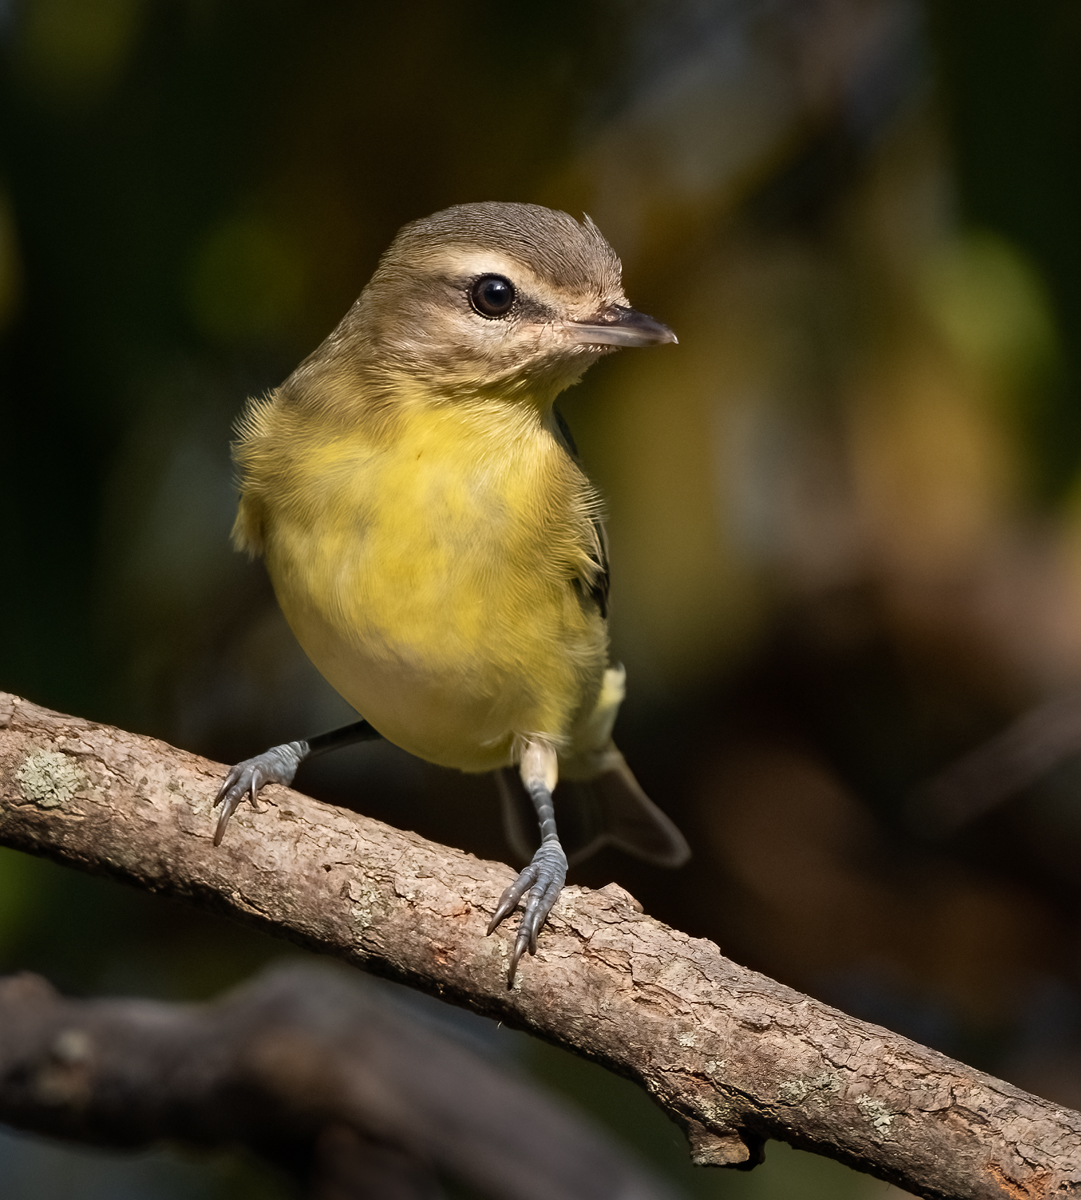 Top Tips for Backyard Bird Photography